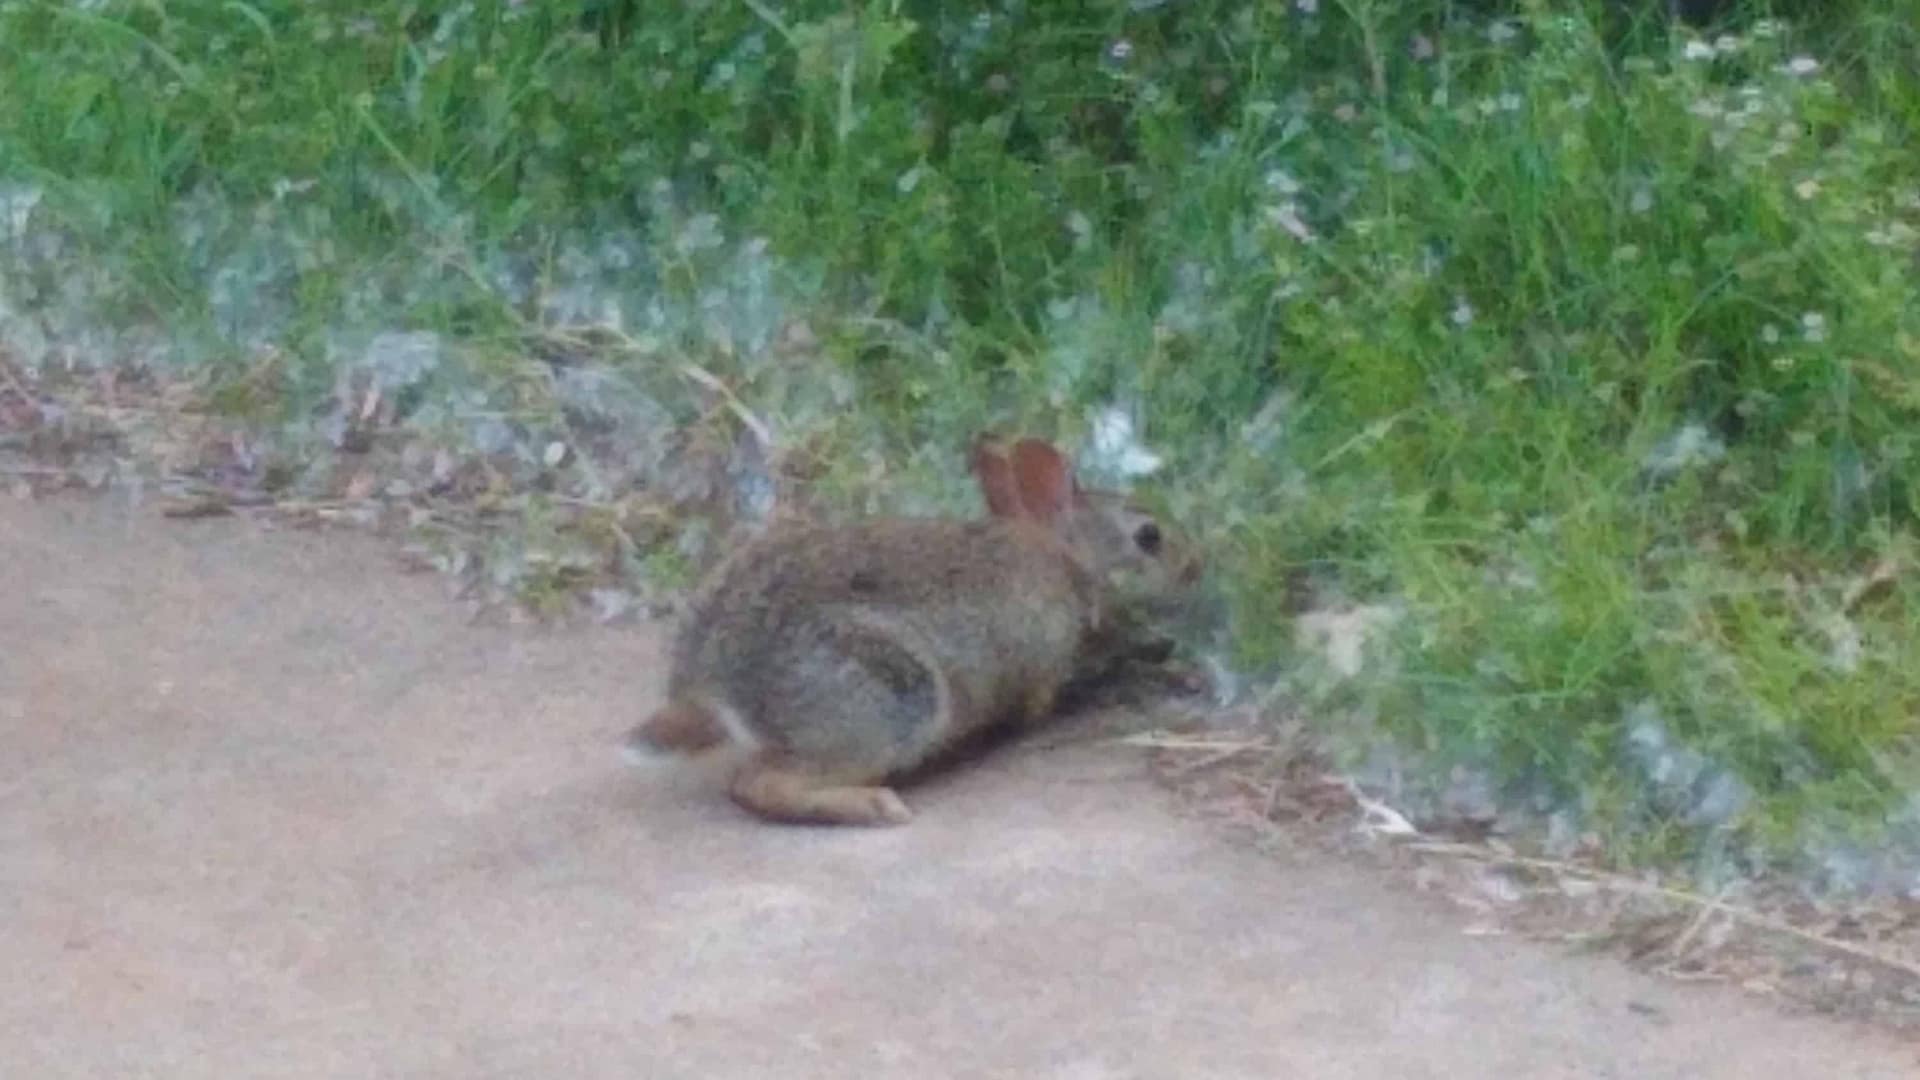 Brown bunny on a concrete patio